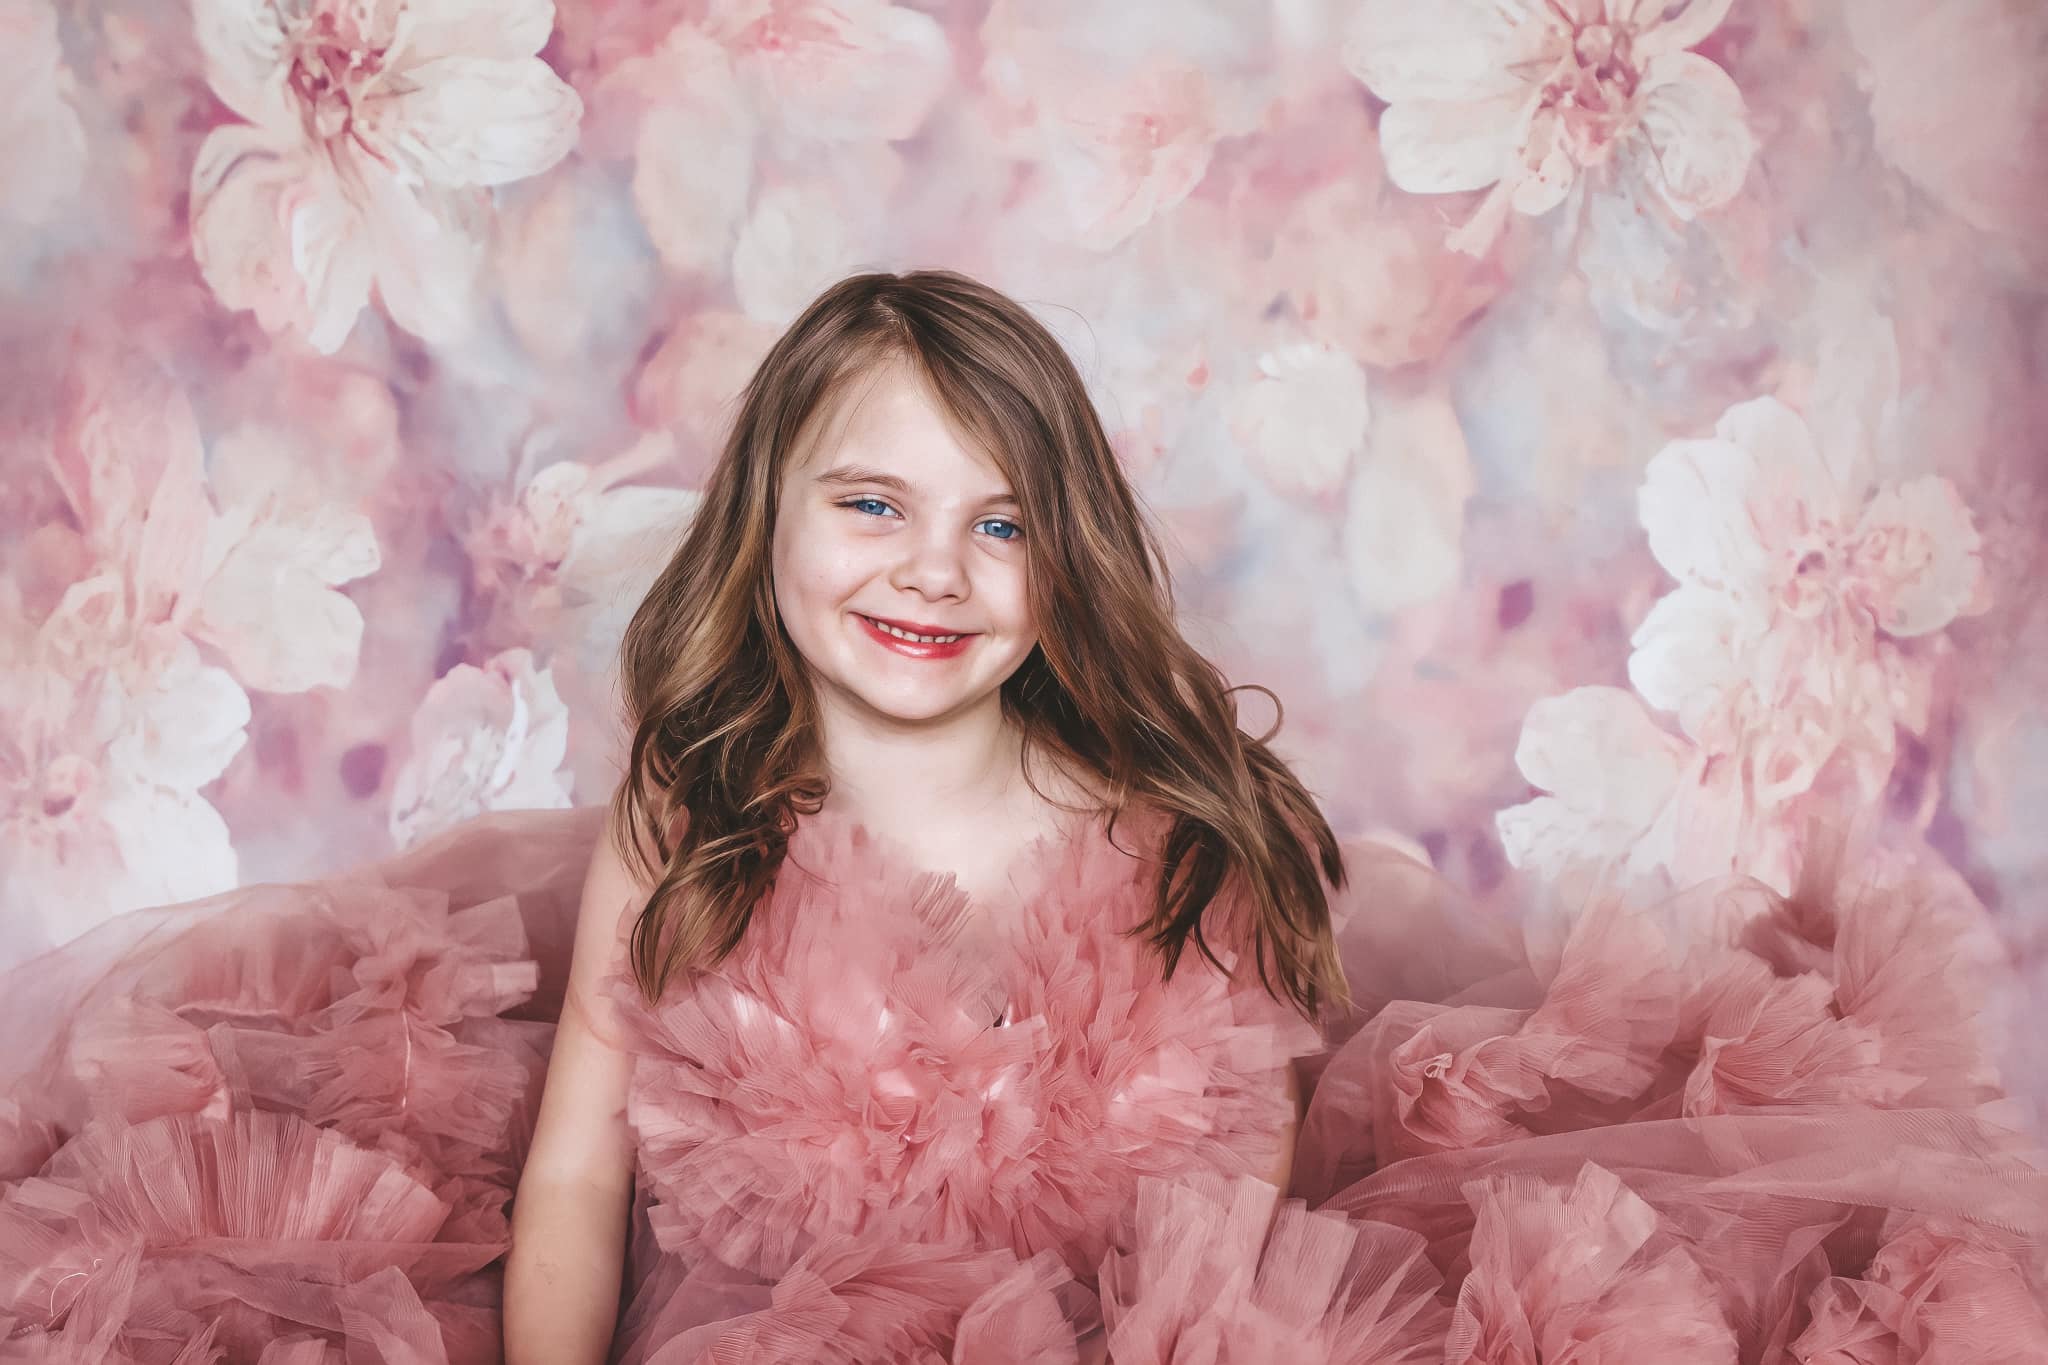 Kate Spring Flower portrait Backdrop Photography